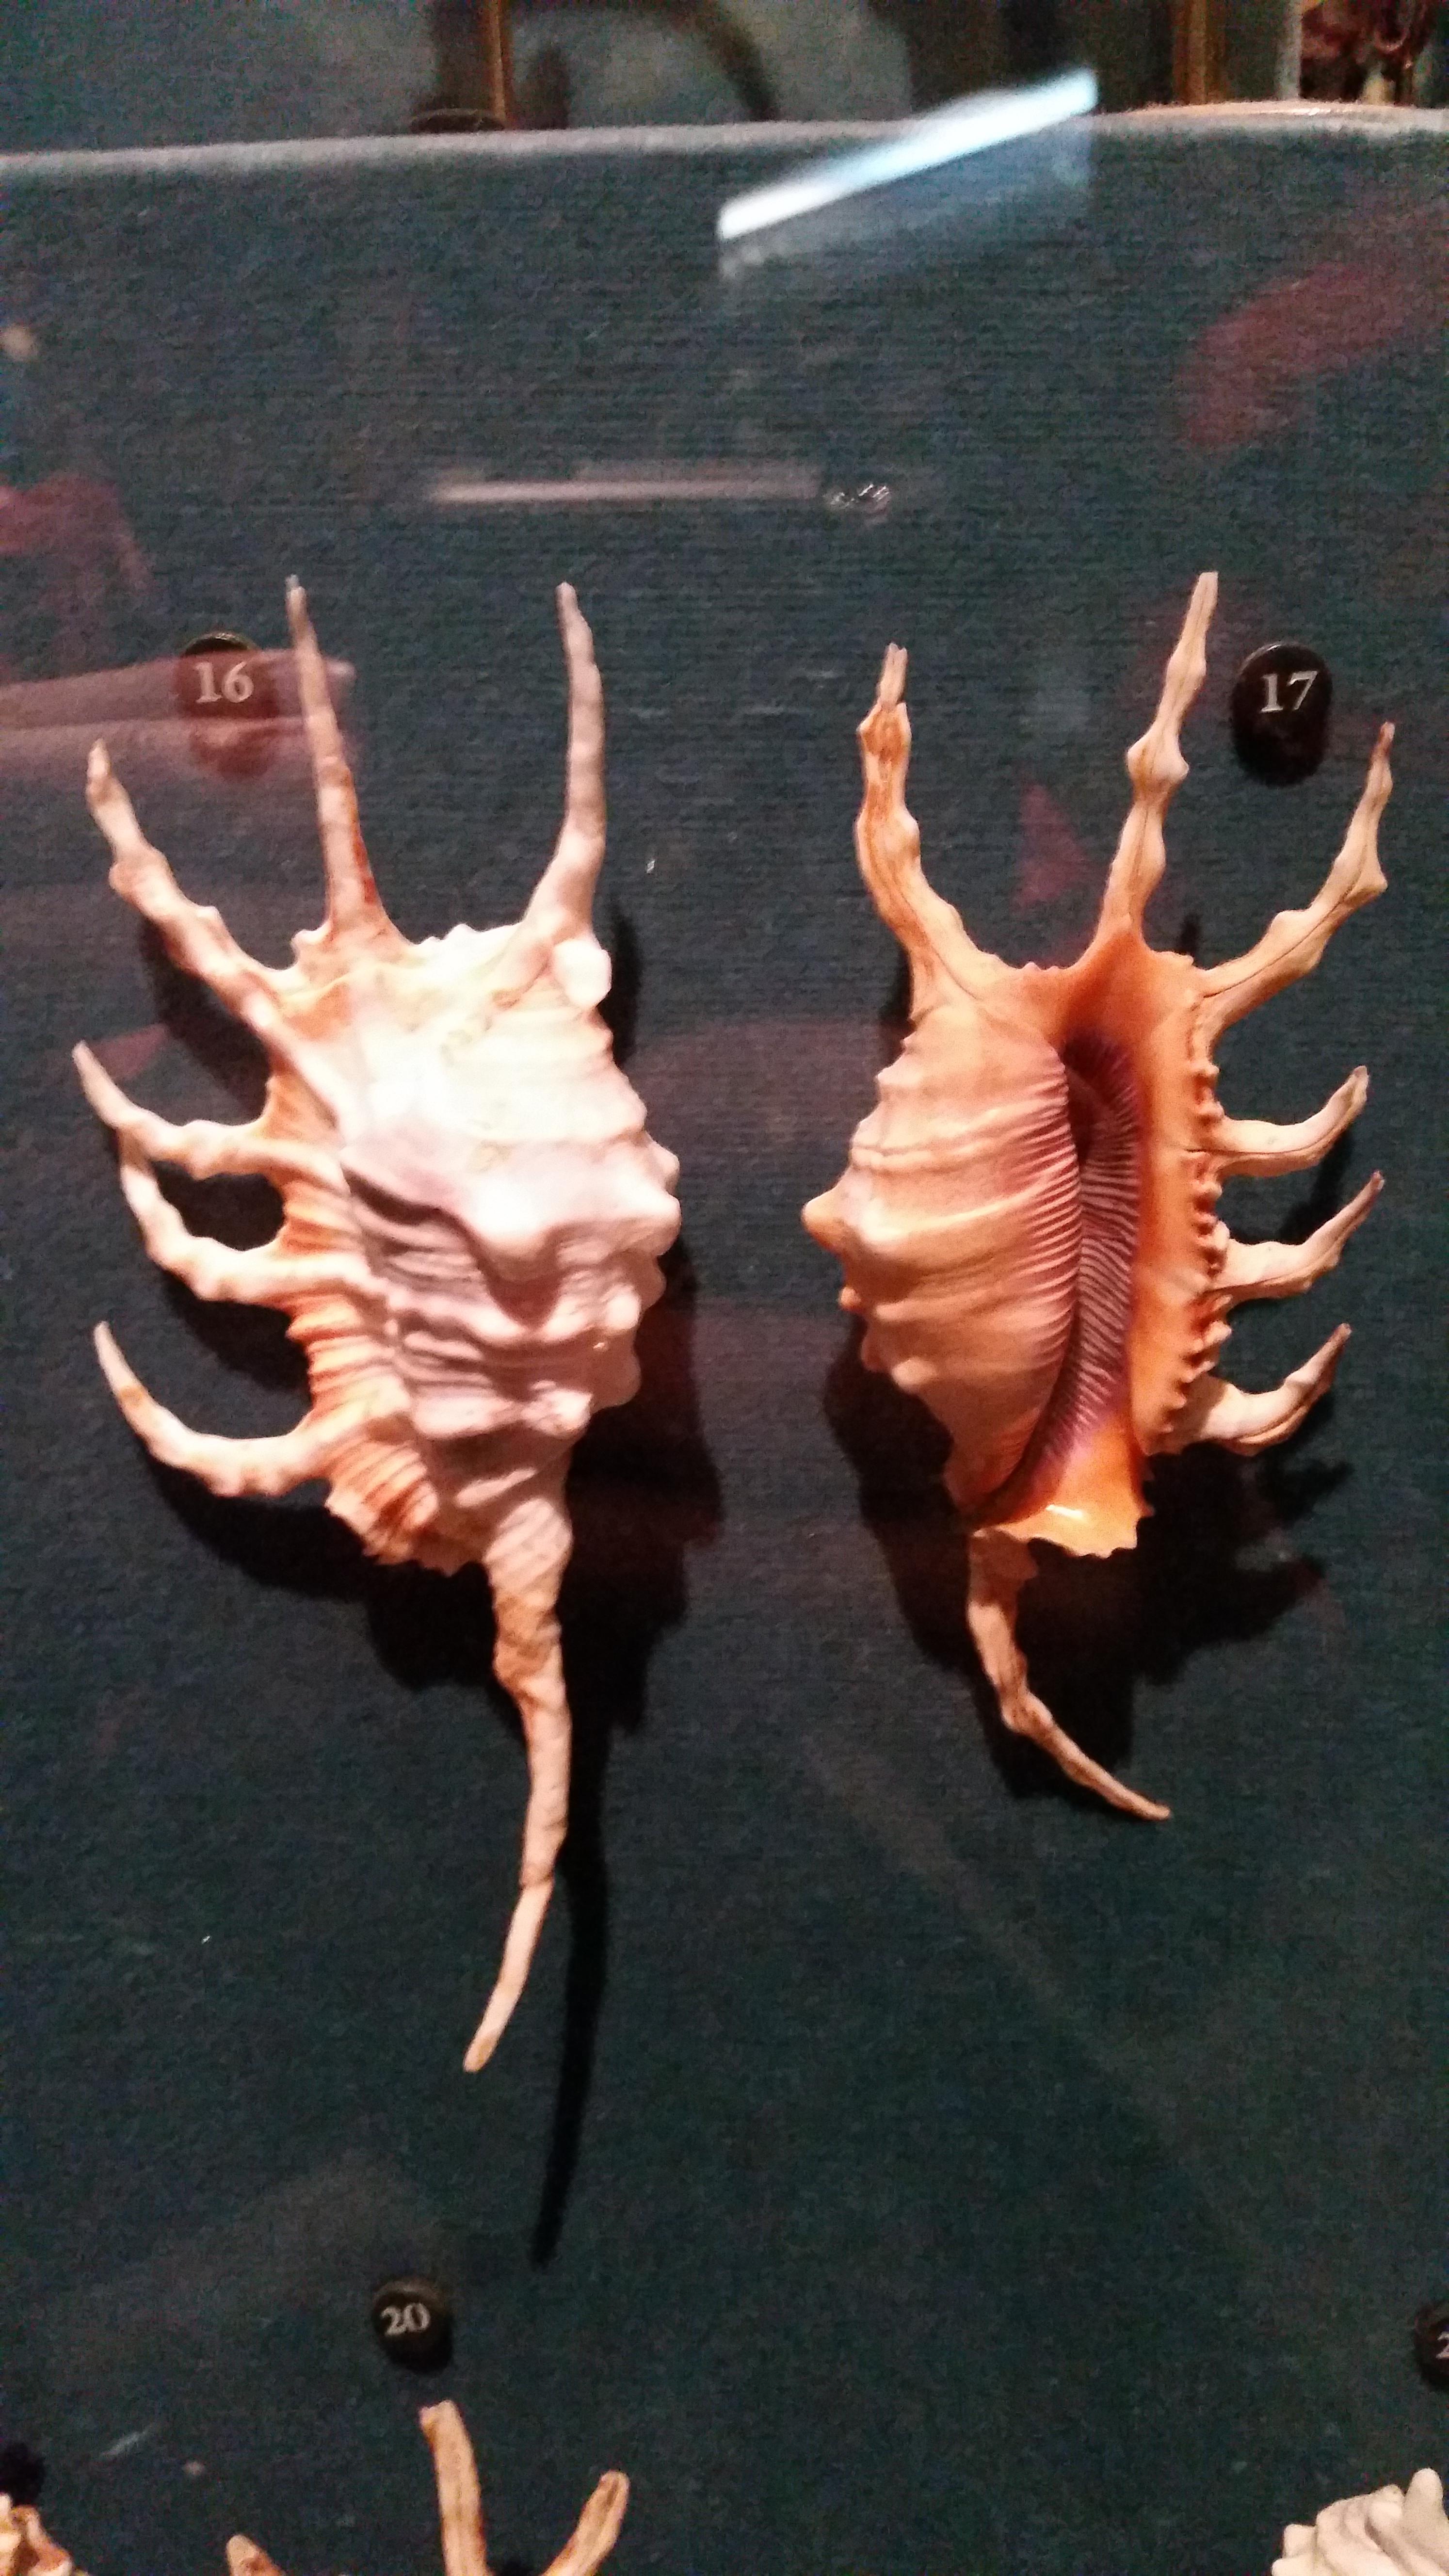 Scorpio Conch shells look like face hugger aliens.